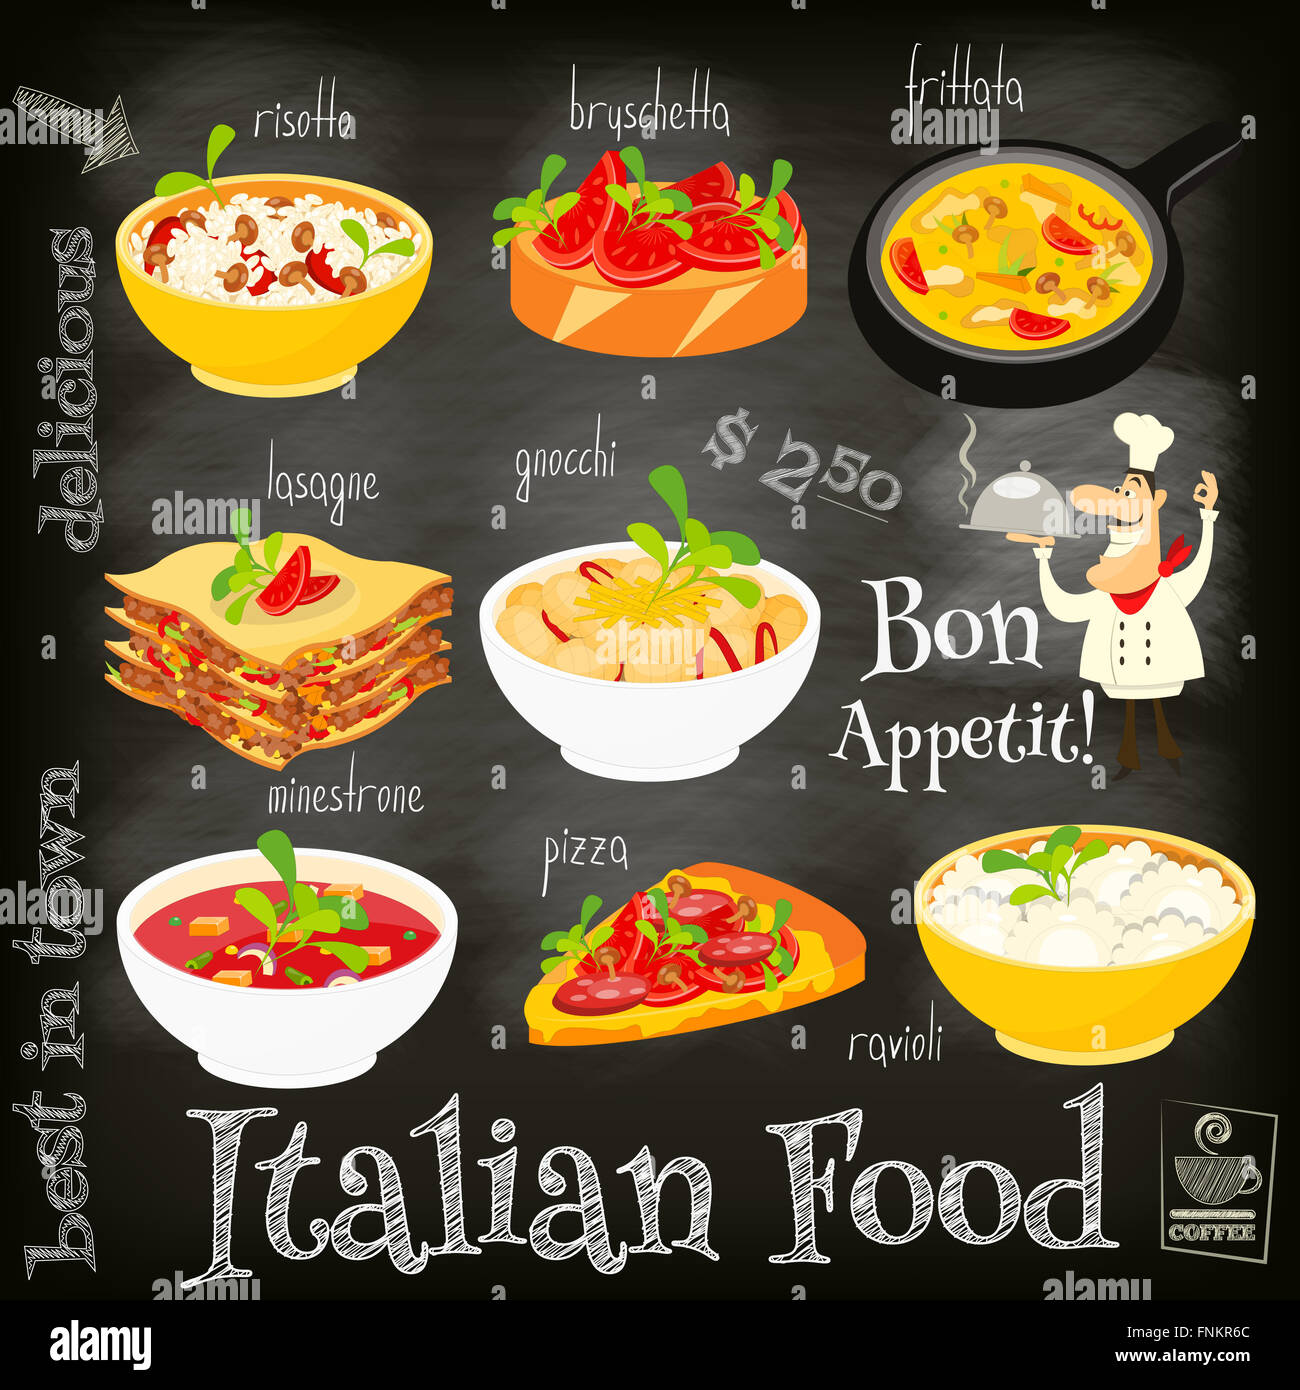 Italian Food Menu Backgrounds